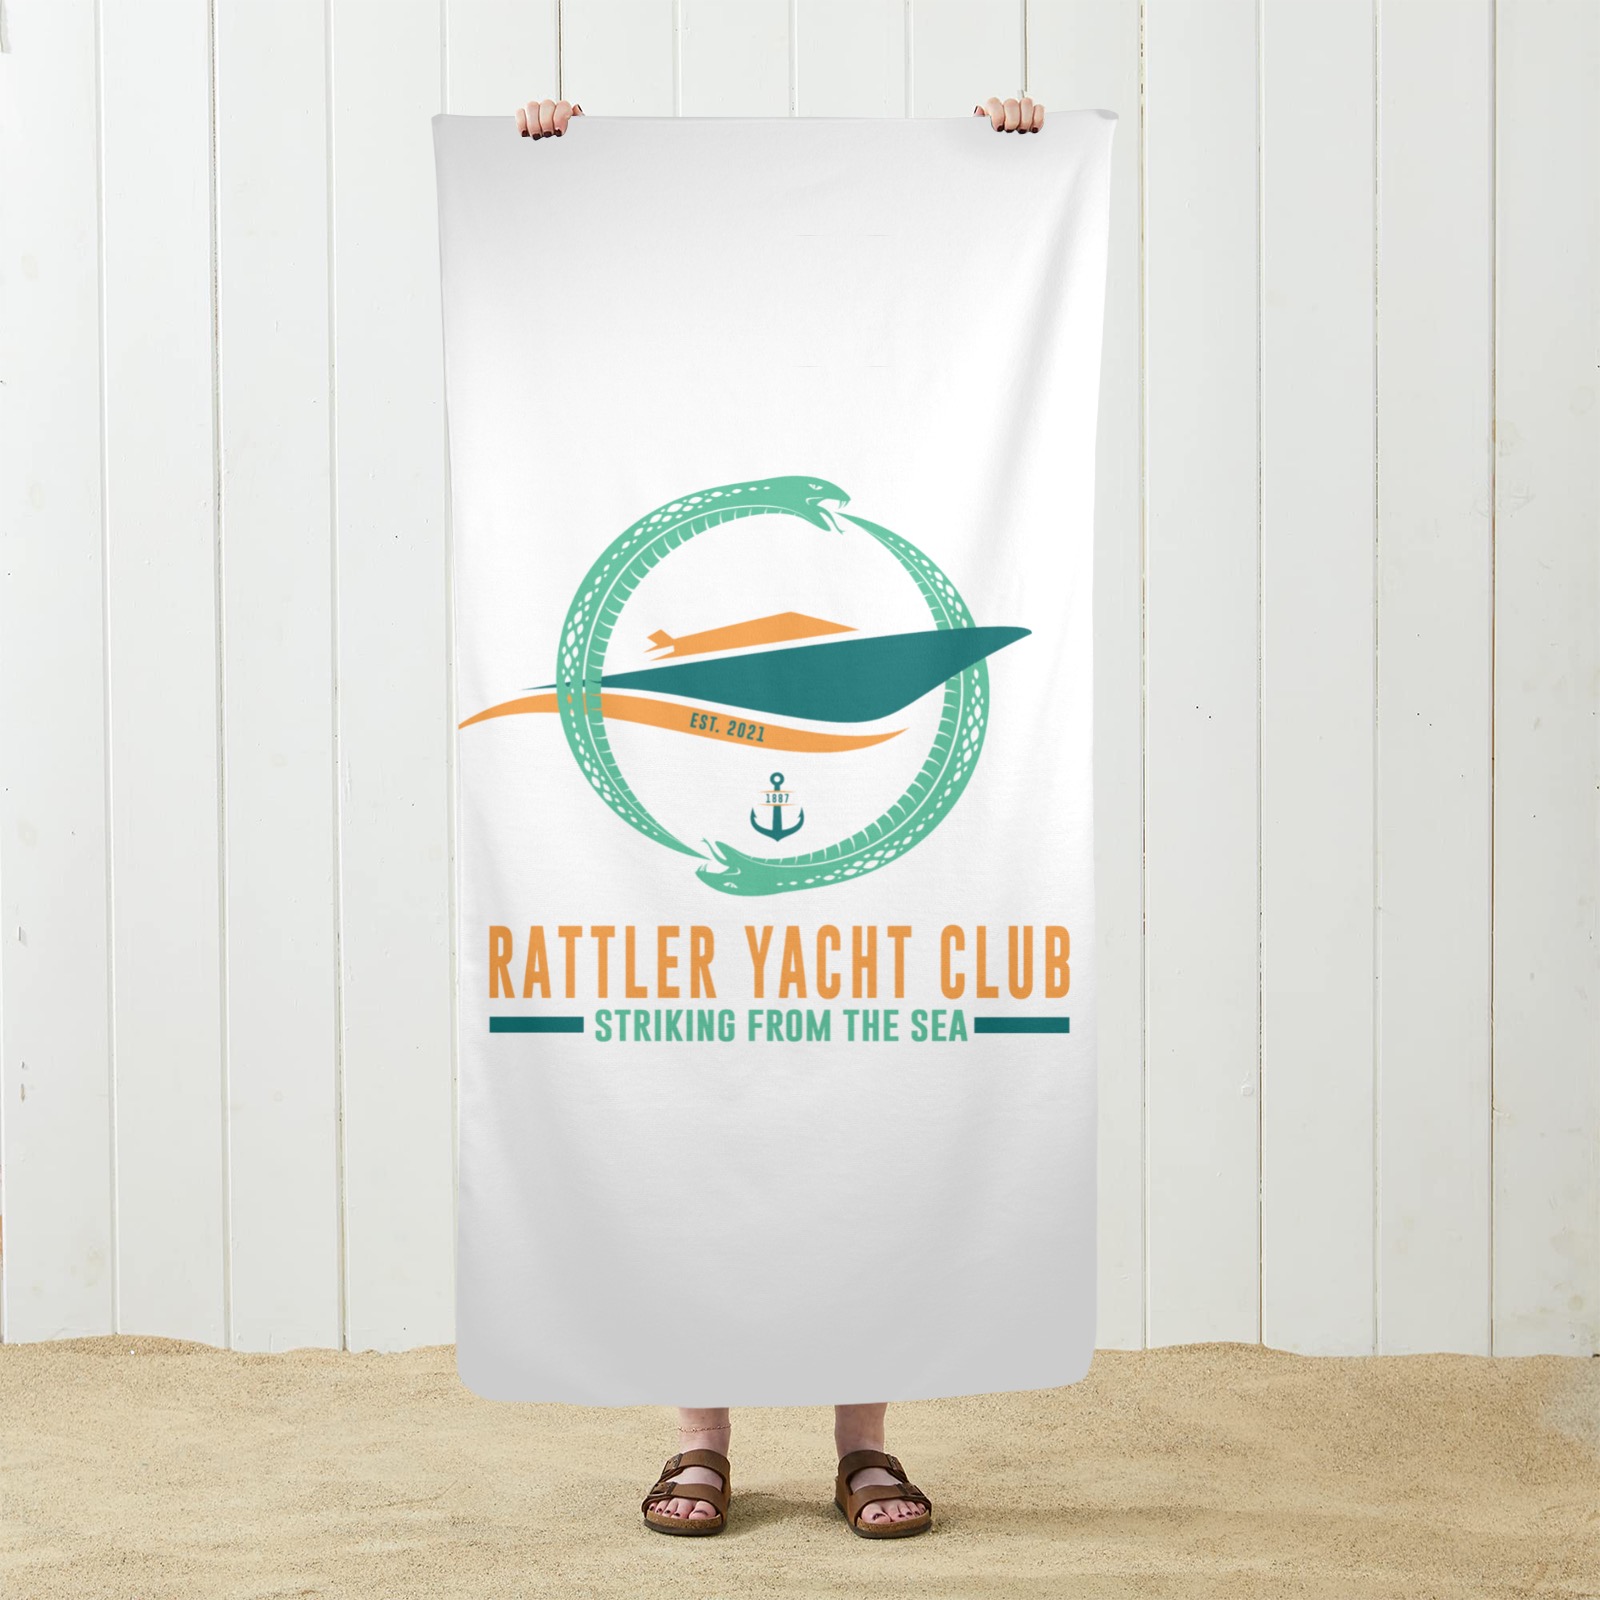 RYC Beach Towel 29"x58"(NEW)